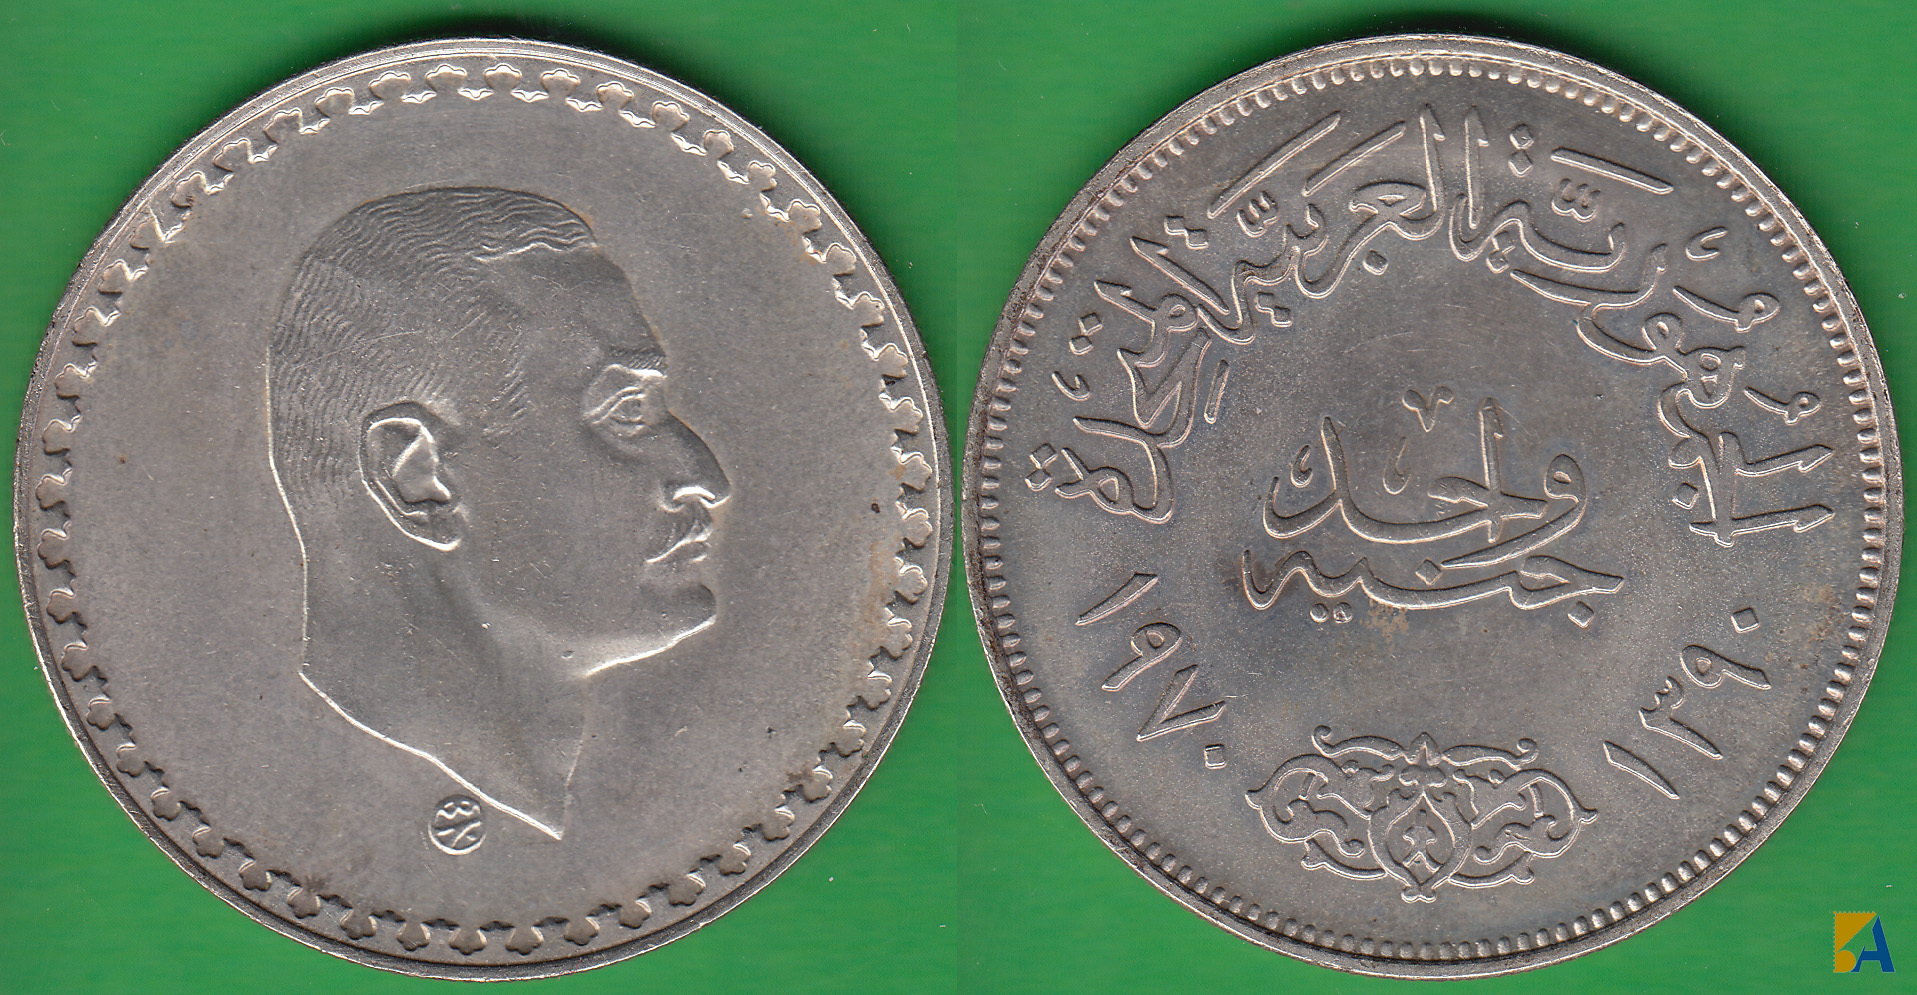 EGIPTO - EGYPT. 1 LIBRA (POUND) DE 1970. PLATA 0.720.